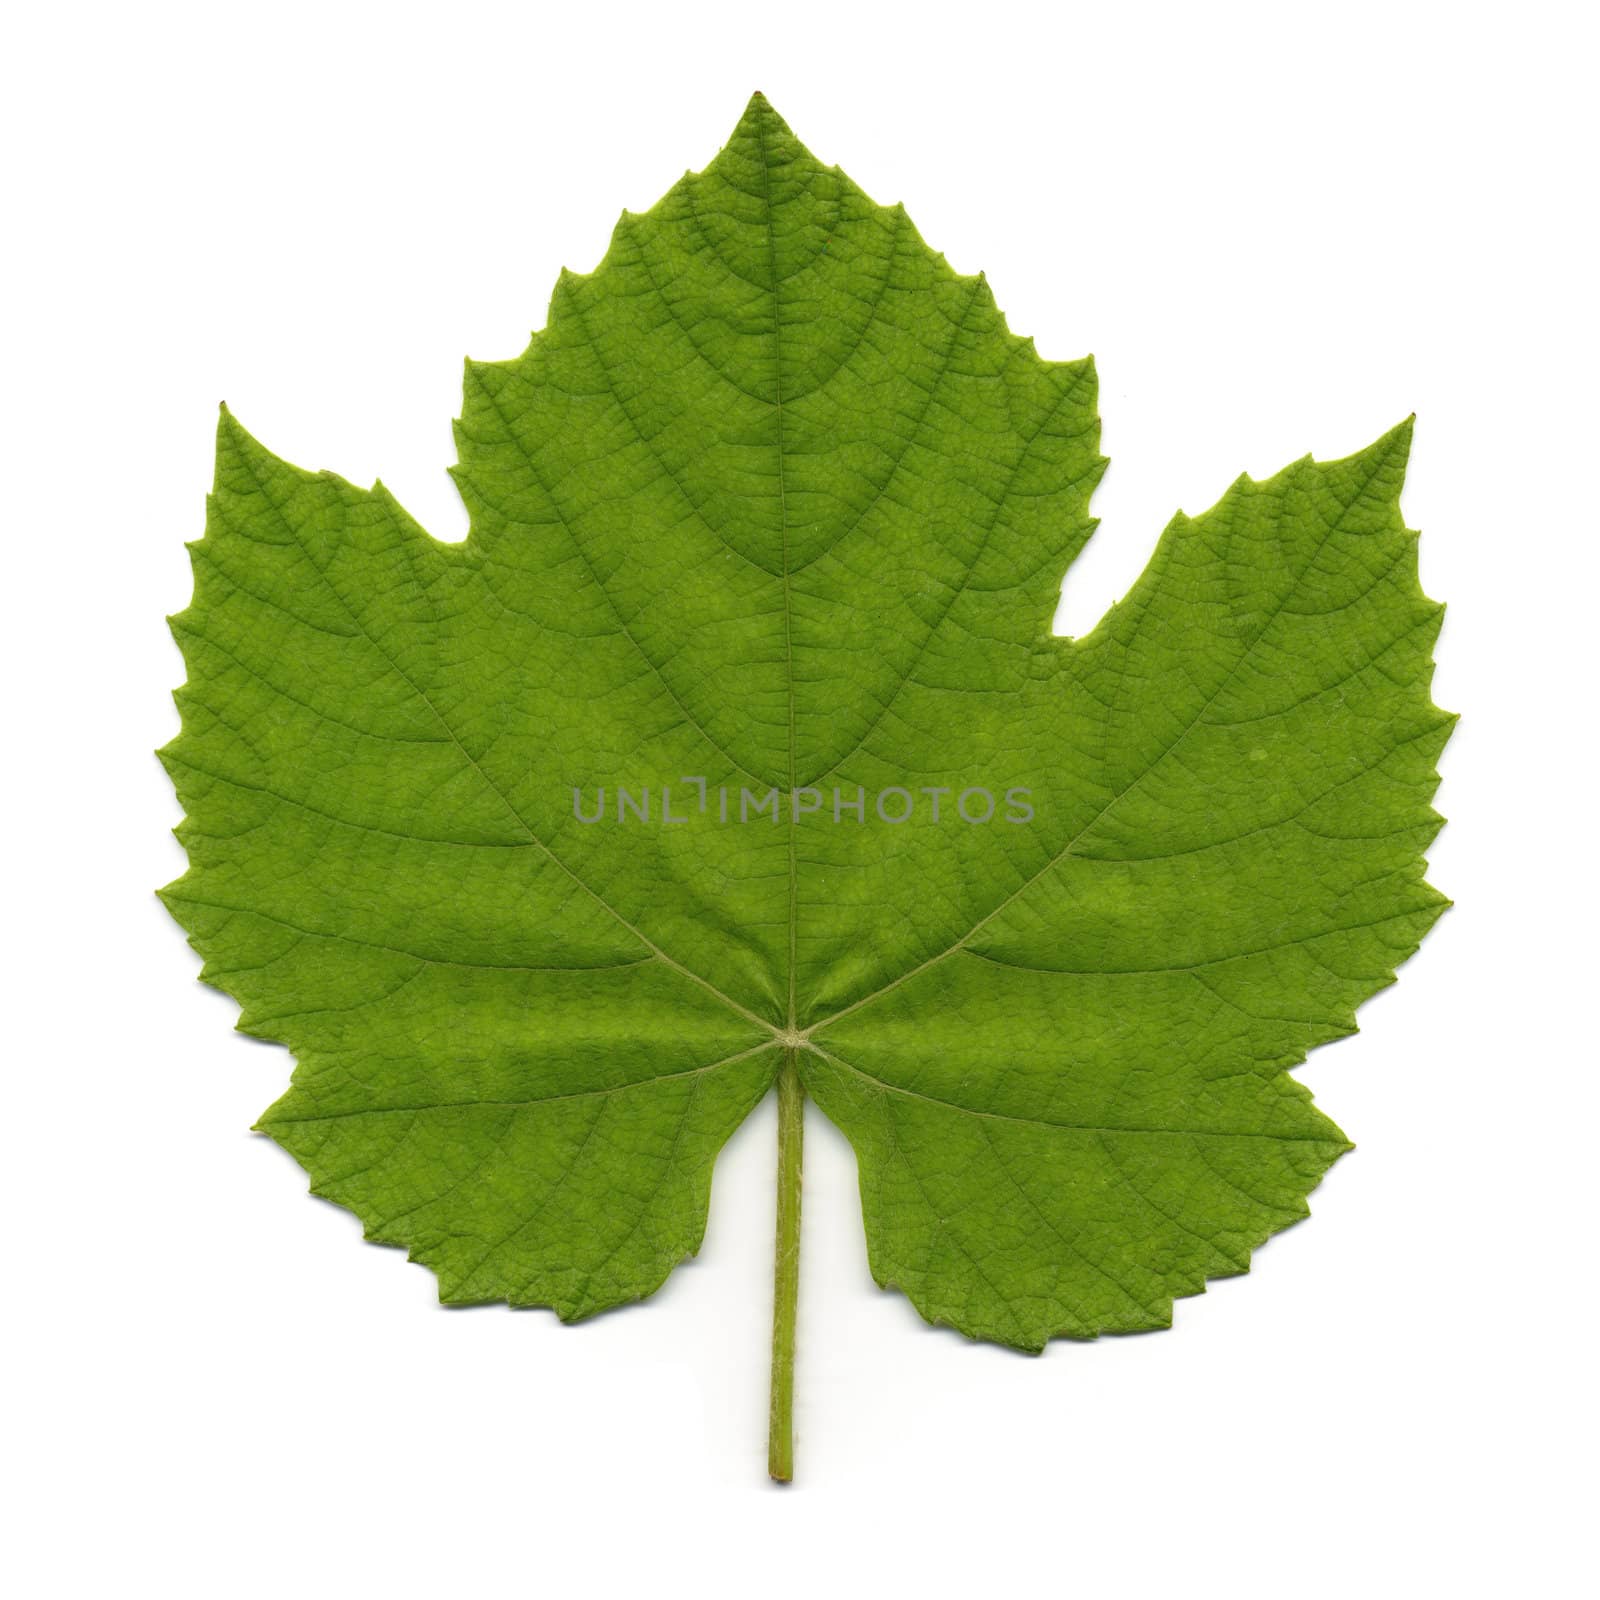 Leaf by claudiodivizia